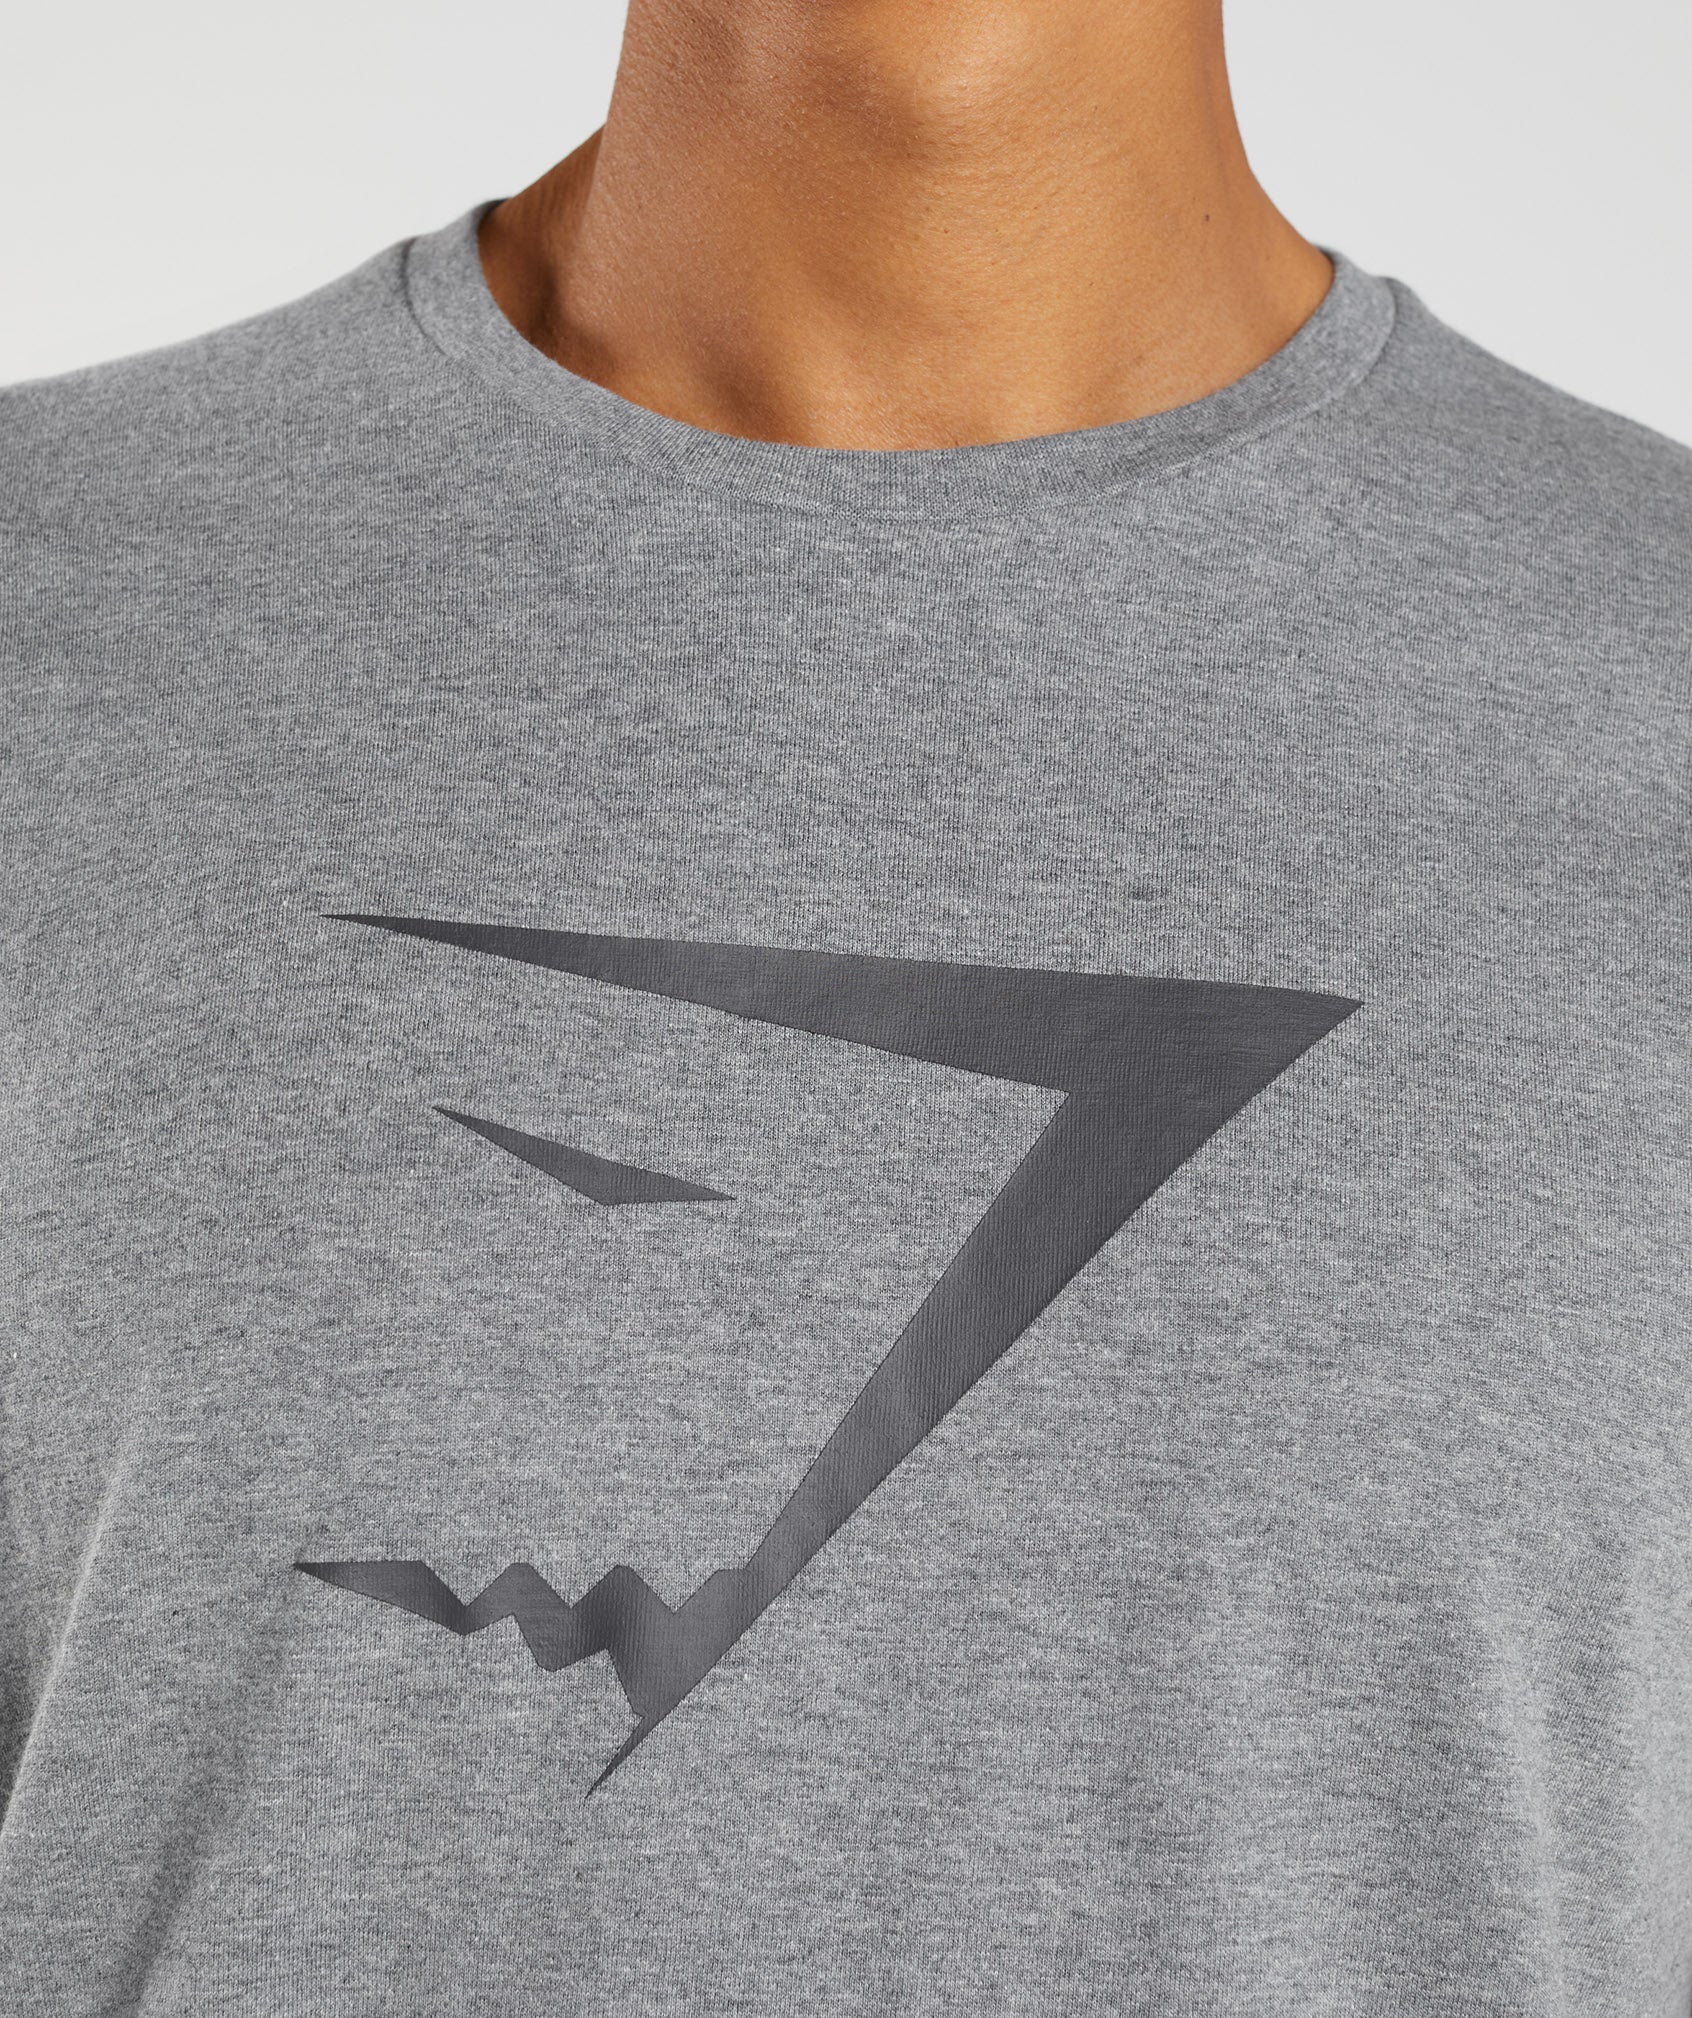 Sharkhead Infill T-Shirt in Charcoal Grey Marl - view 3